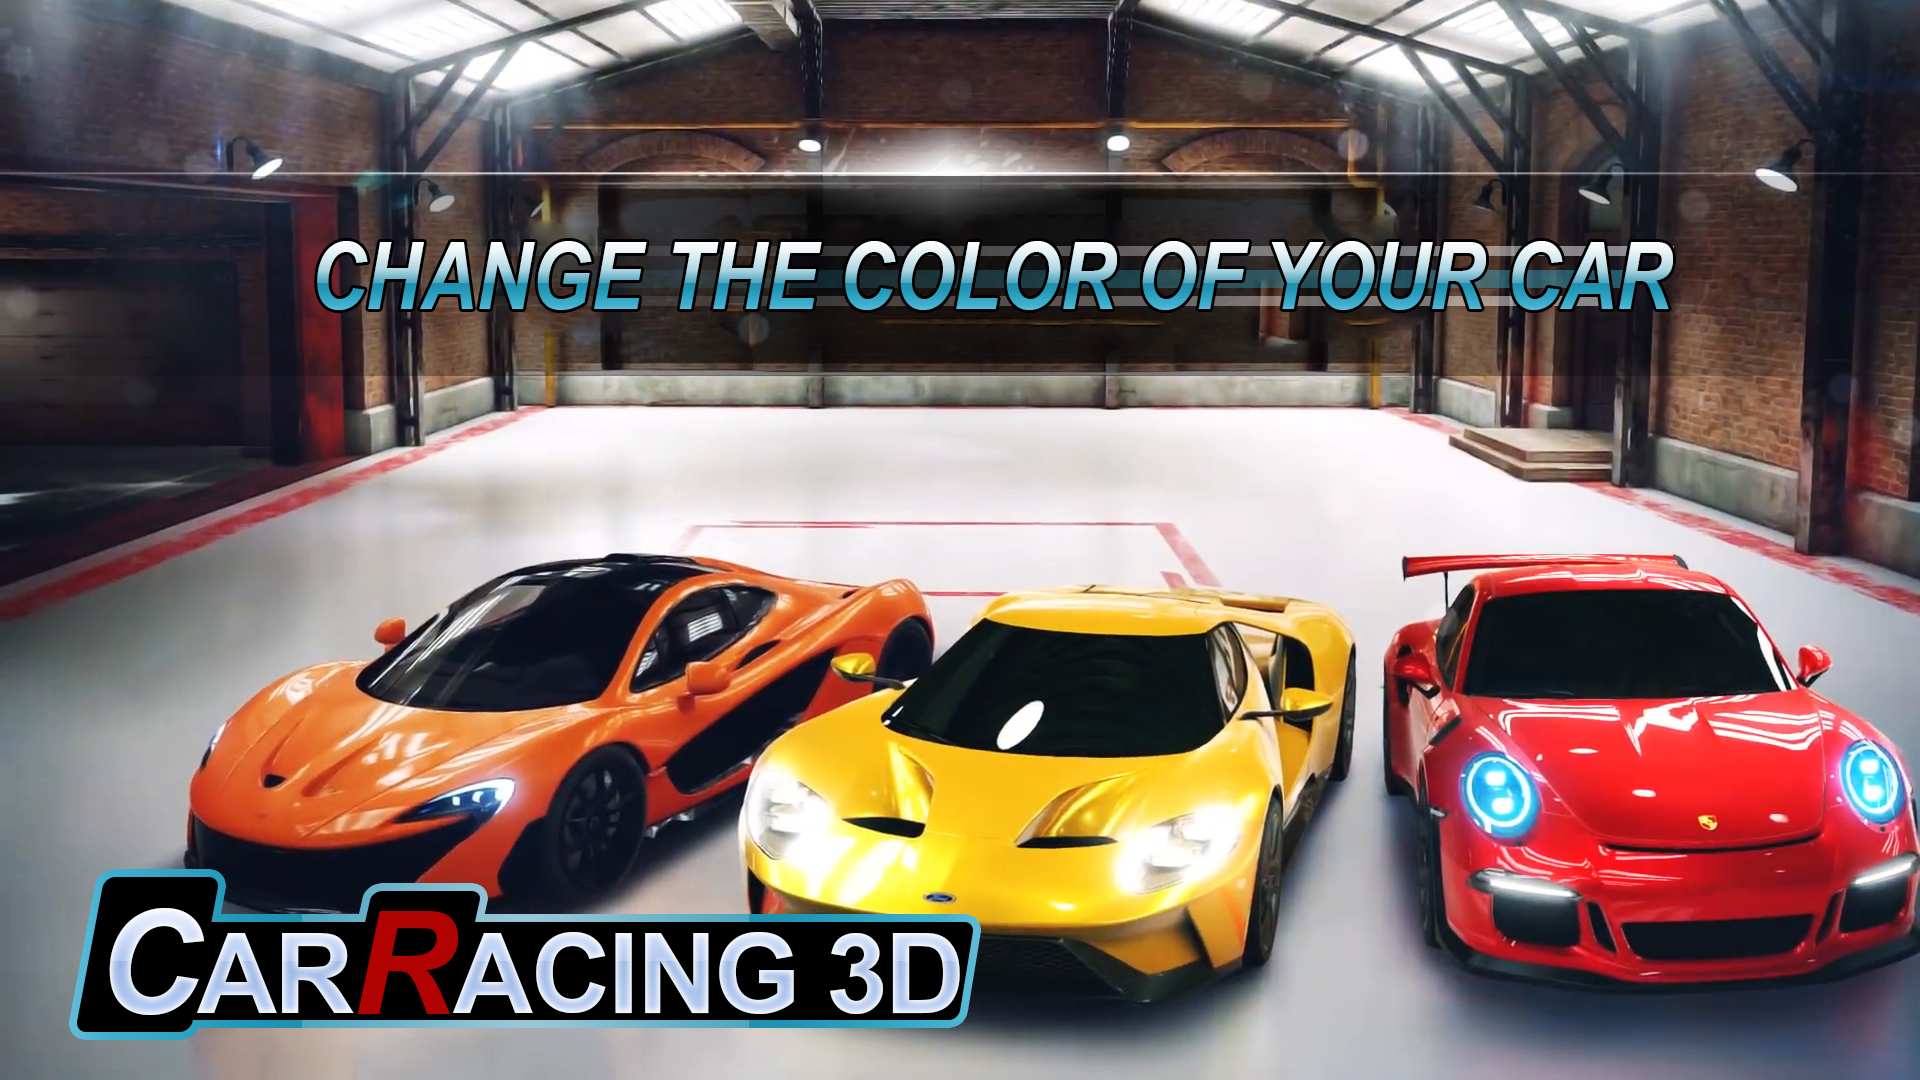 Screenshot 1 of ကားပြိုင်ပွဲ 3D- မြို့ပြိုင်ကား 2018- ကား 3D တွင် ပြိုင်ကား 